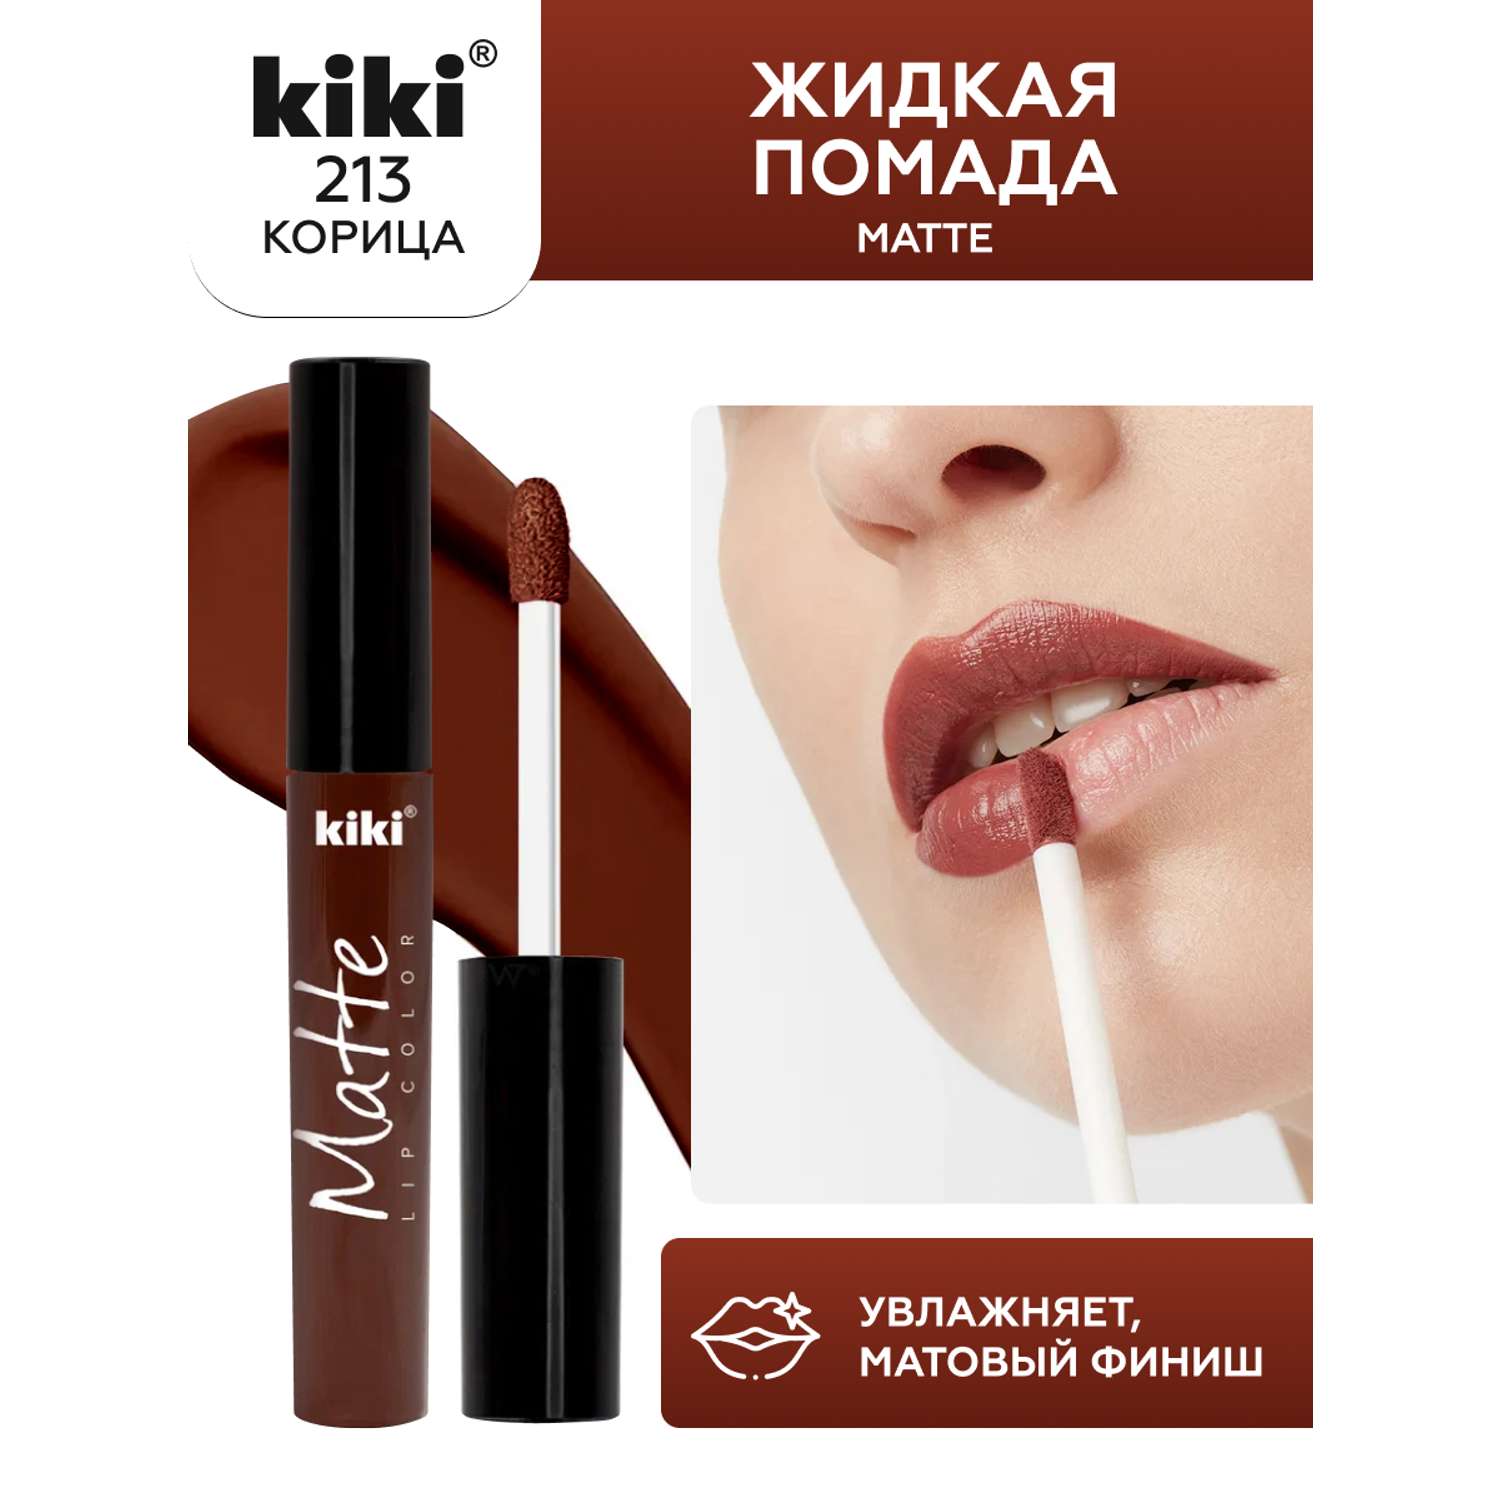 Жидкая помада для губ KIKI Matte lip color 213 корица - фото 1